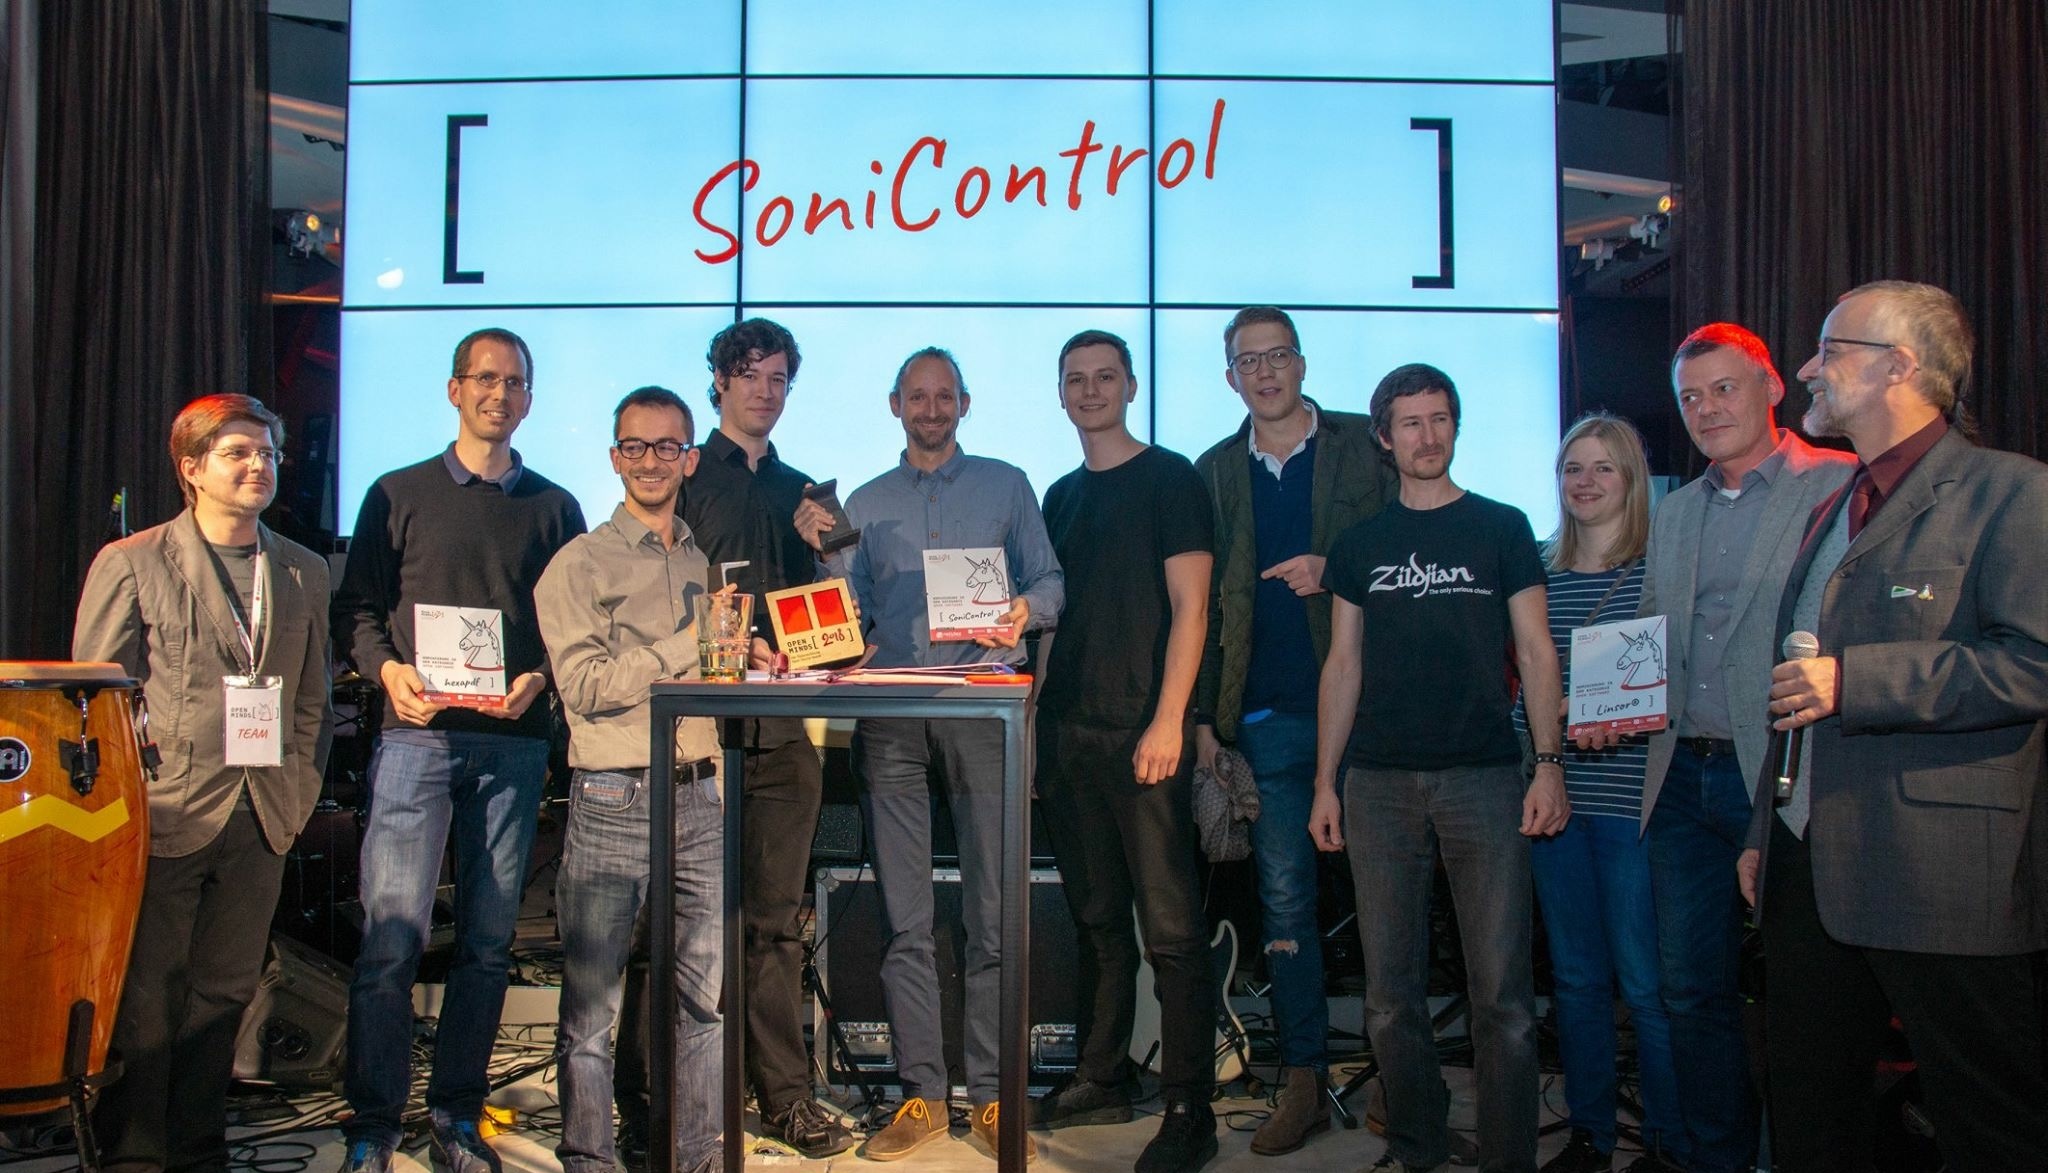 SoniControl team receiving the award - Fotocredit: CC BY-SA Drupal Austria